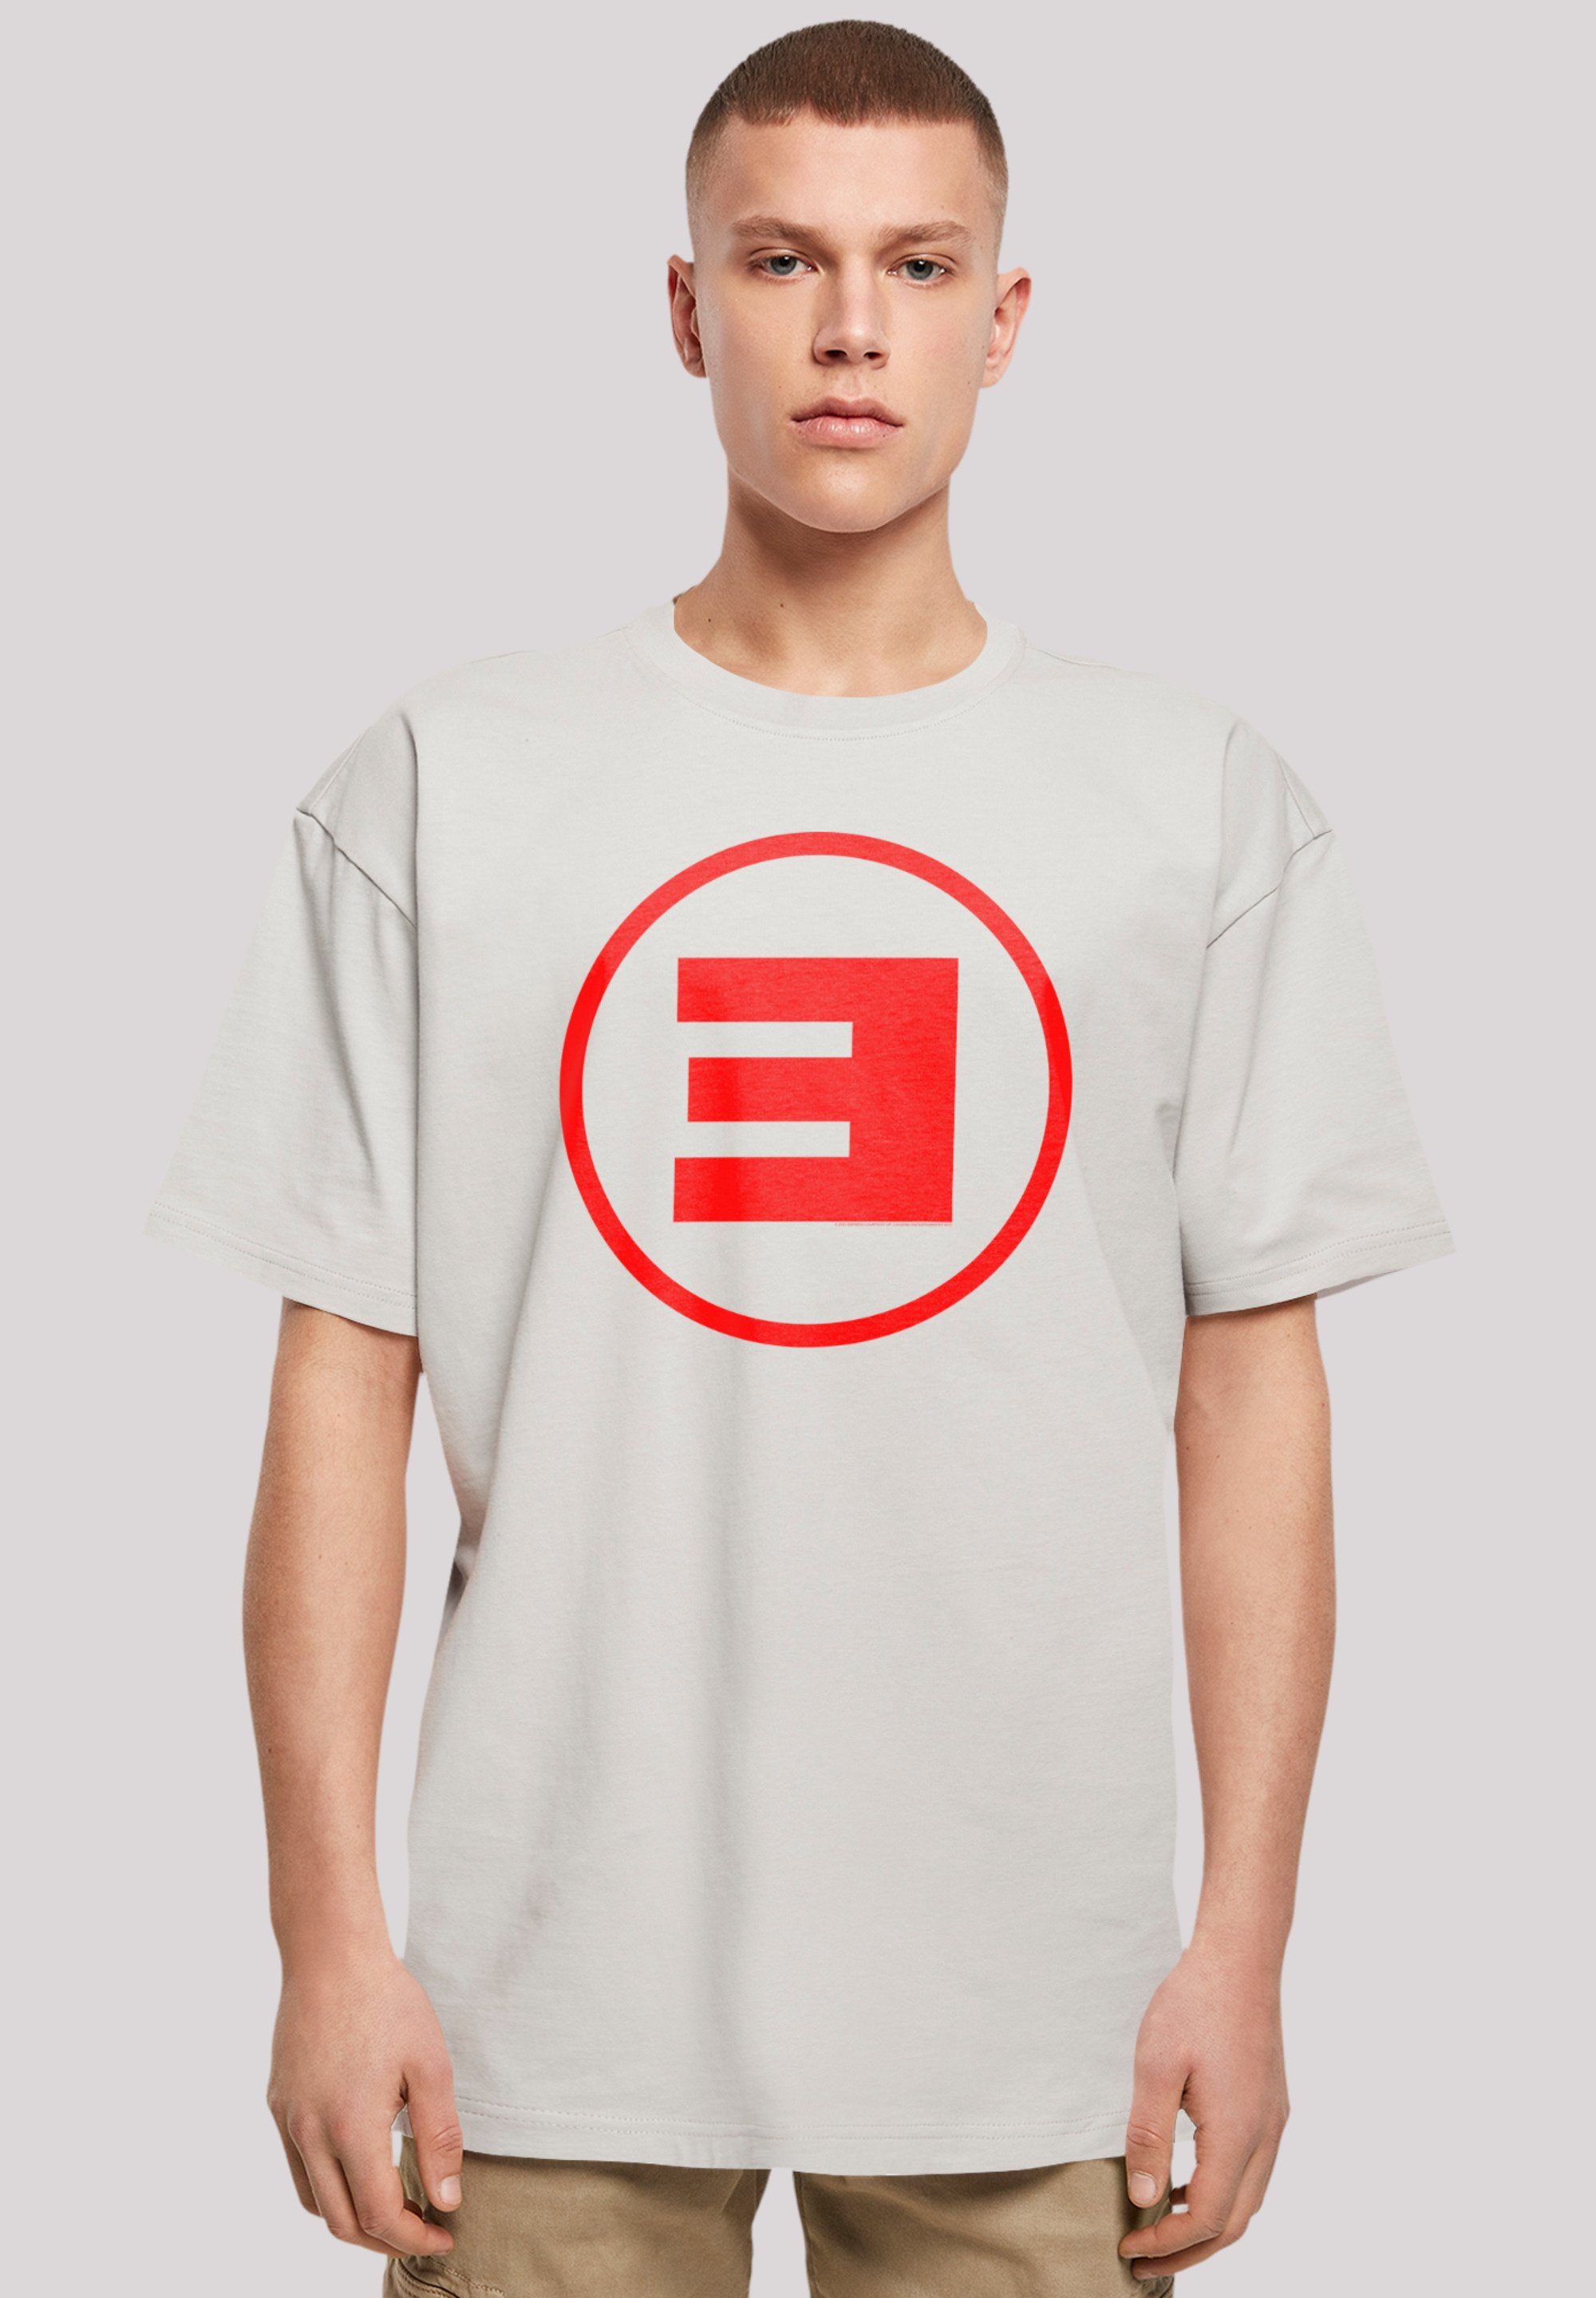 T-Shirt Music lightasphalt Premium By Rock Off Musik, E Hip Rap Qualität, Eminem Hop Circle F4NT4STIC